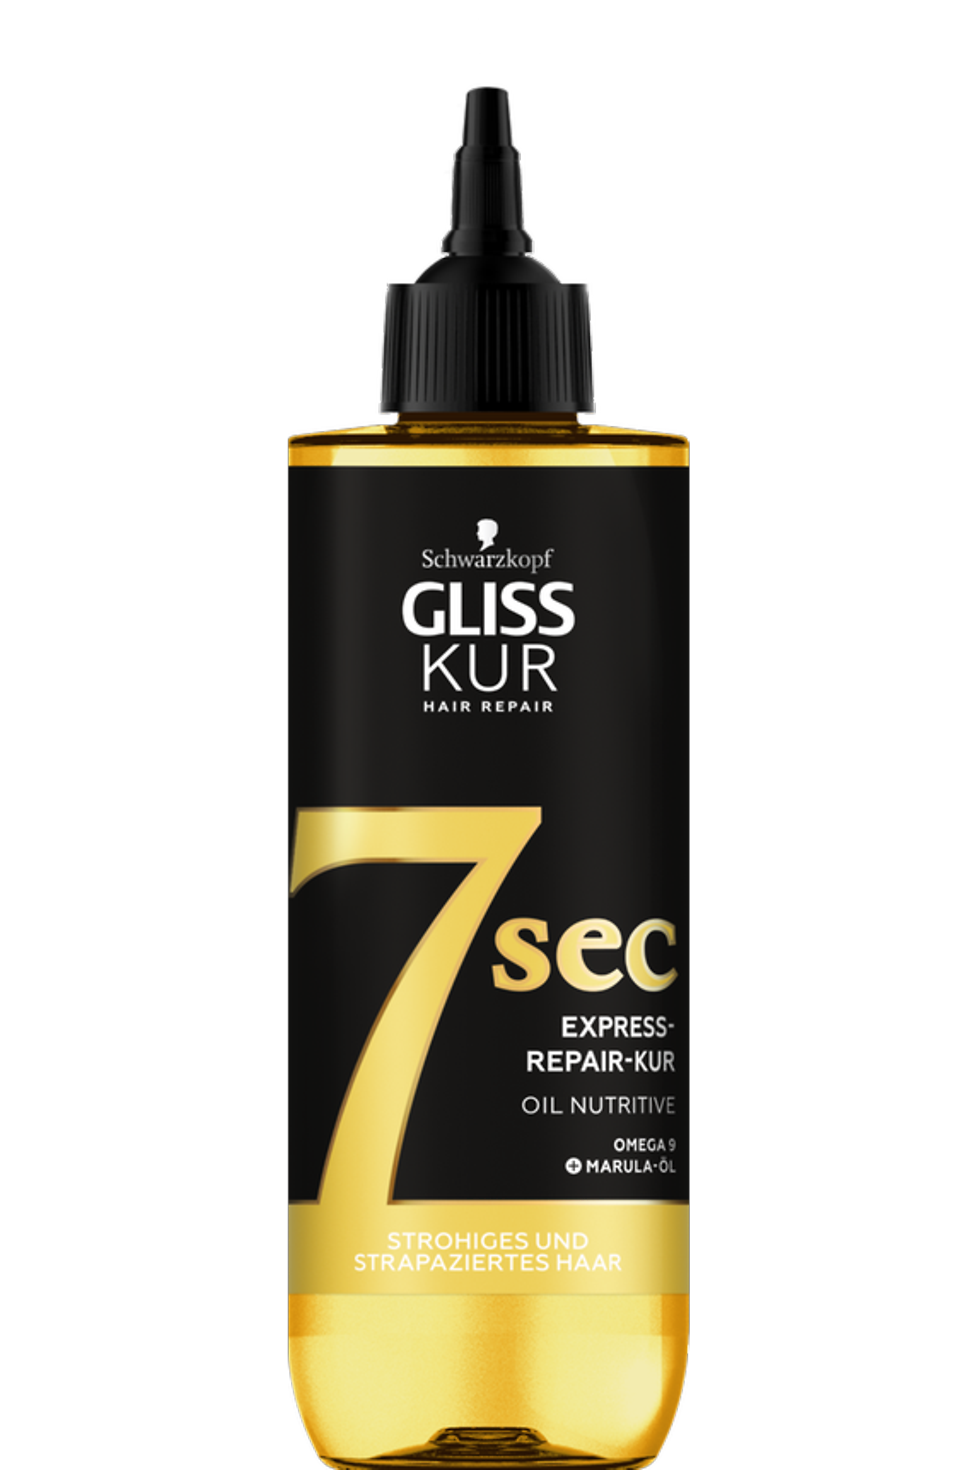 Gliss Kur 7 Sec Express-Repair-Kur Oil Nutritive